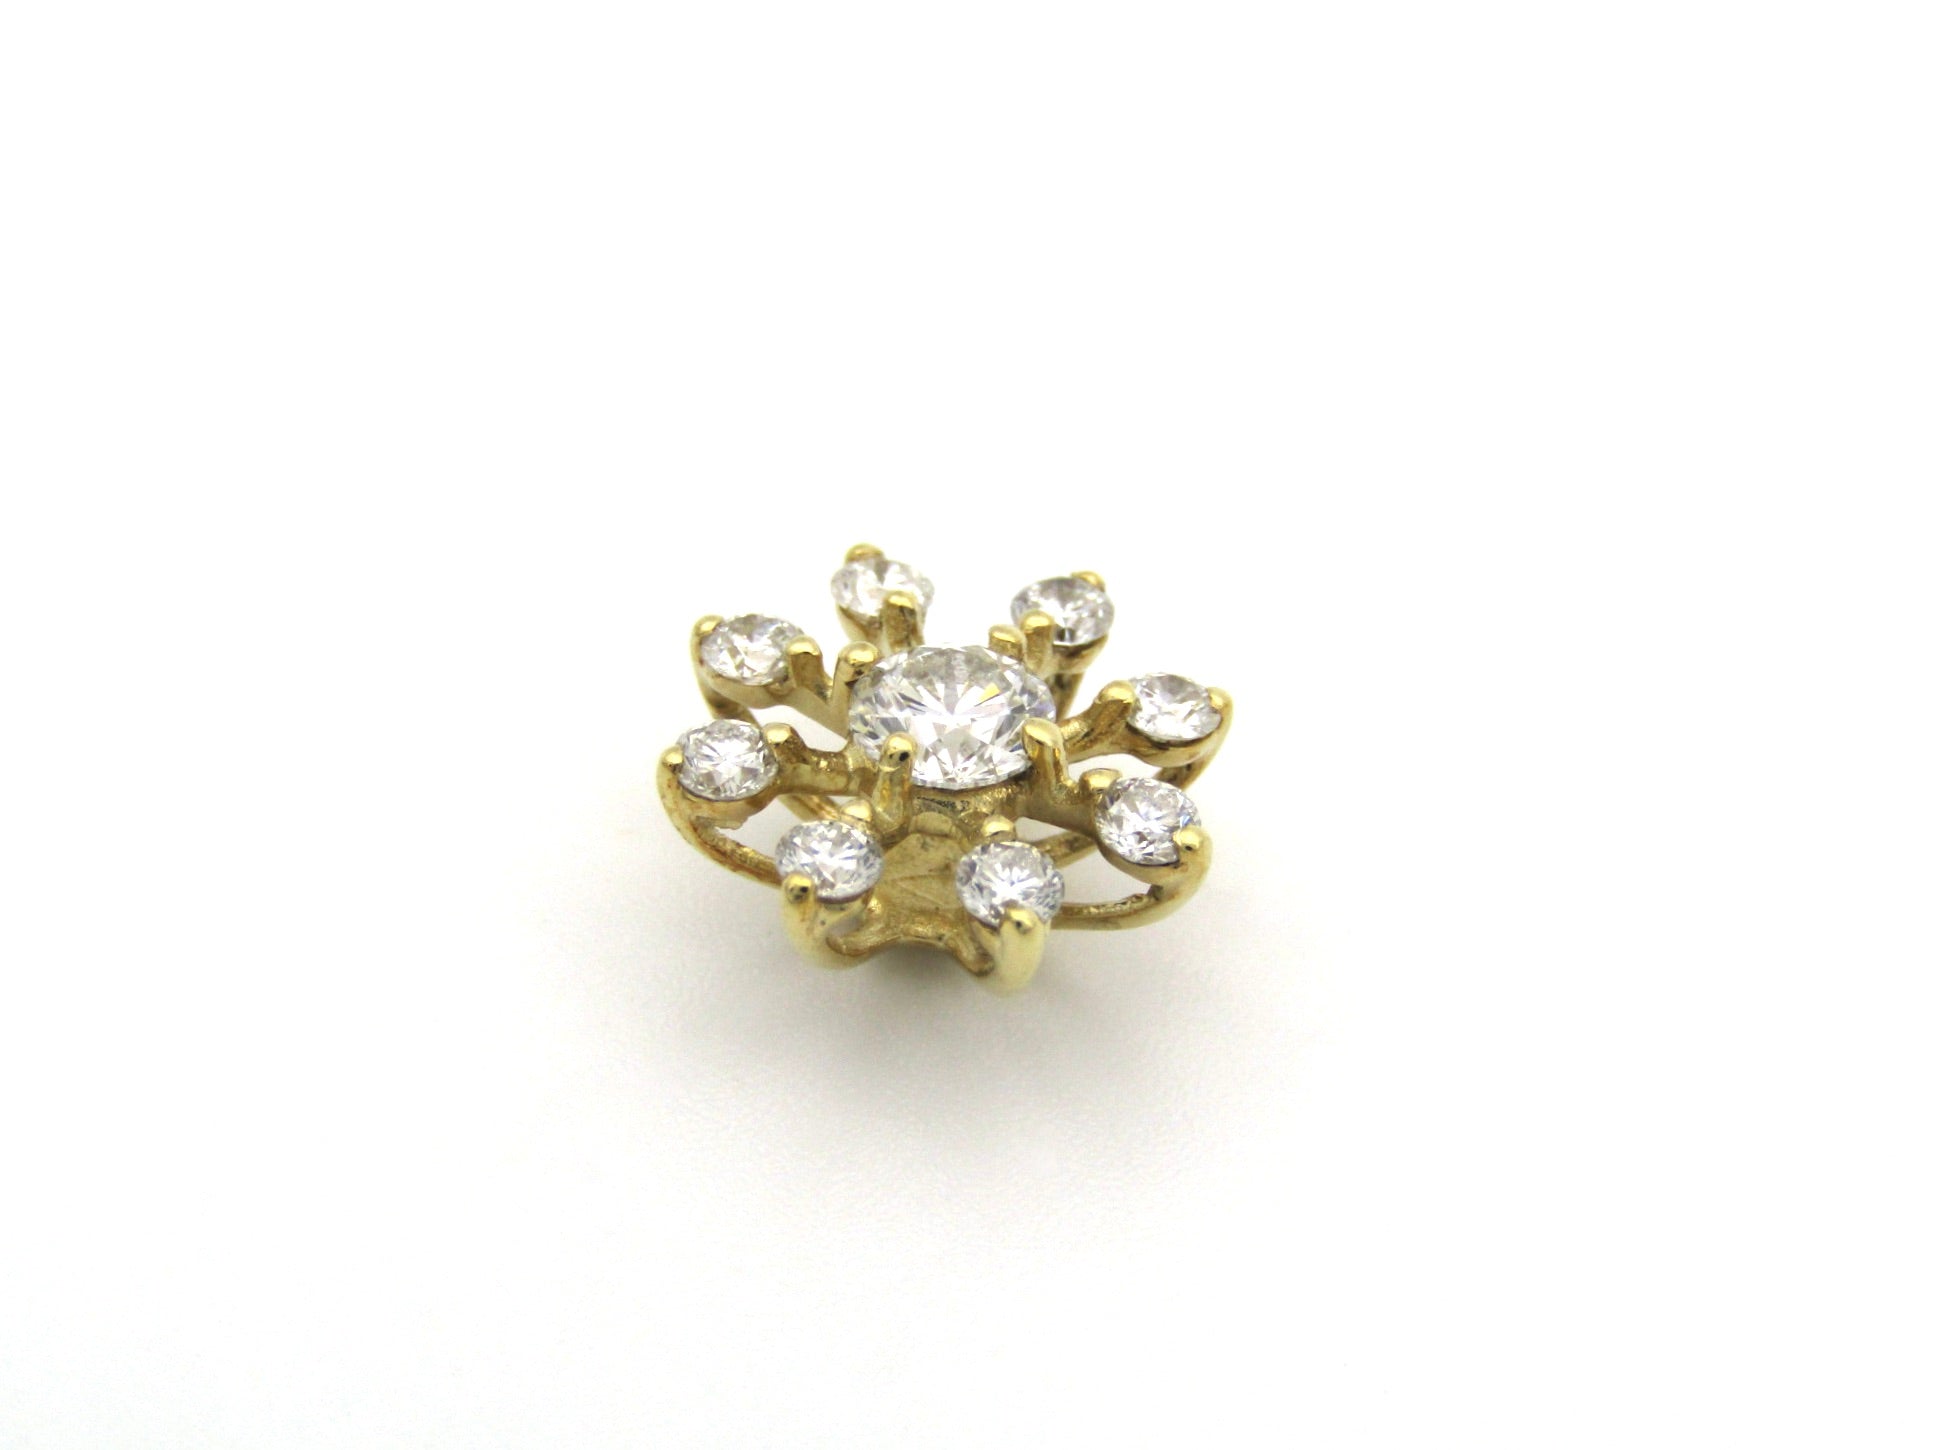 18K gold My Sunshine diamond pendant by Browns.